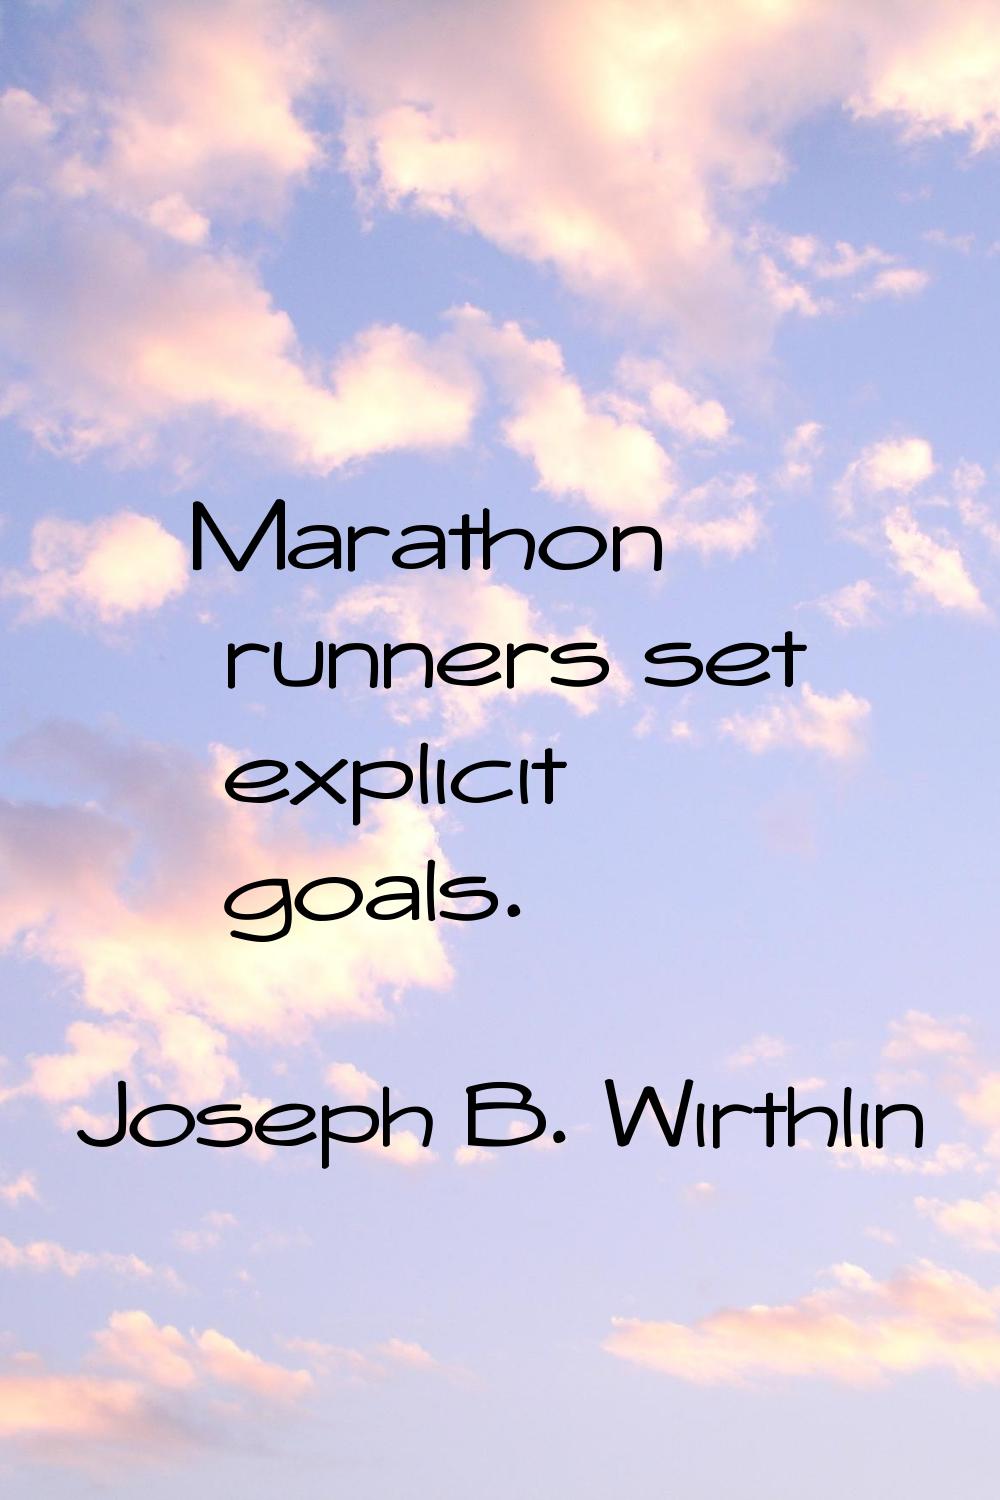 Marathon runners set explicit goals.